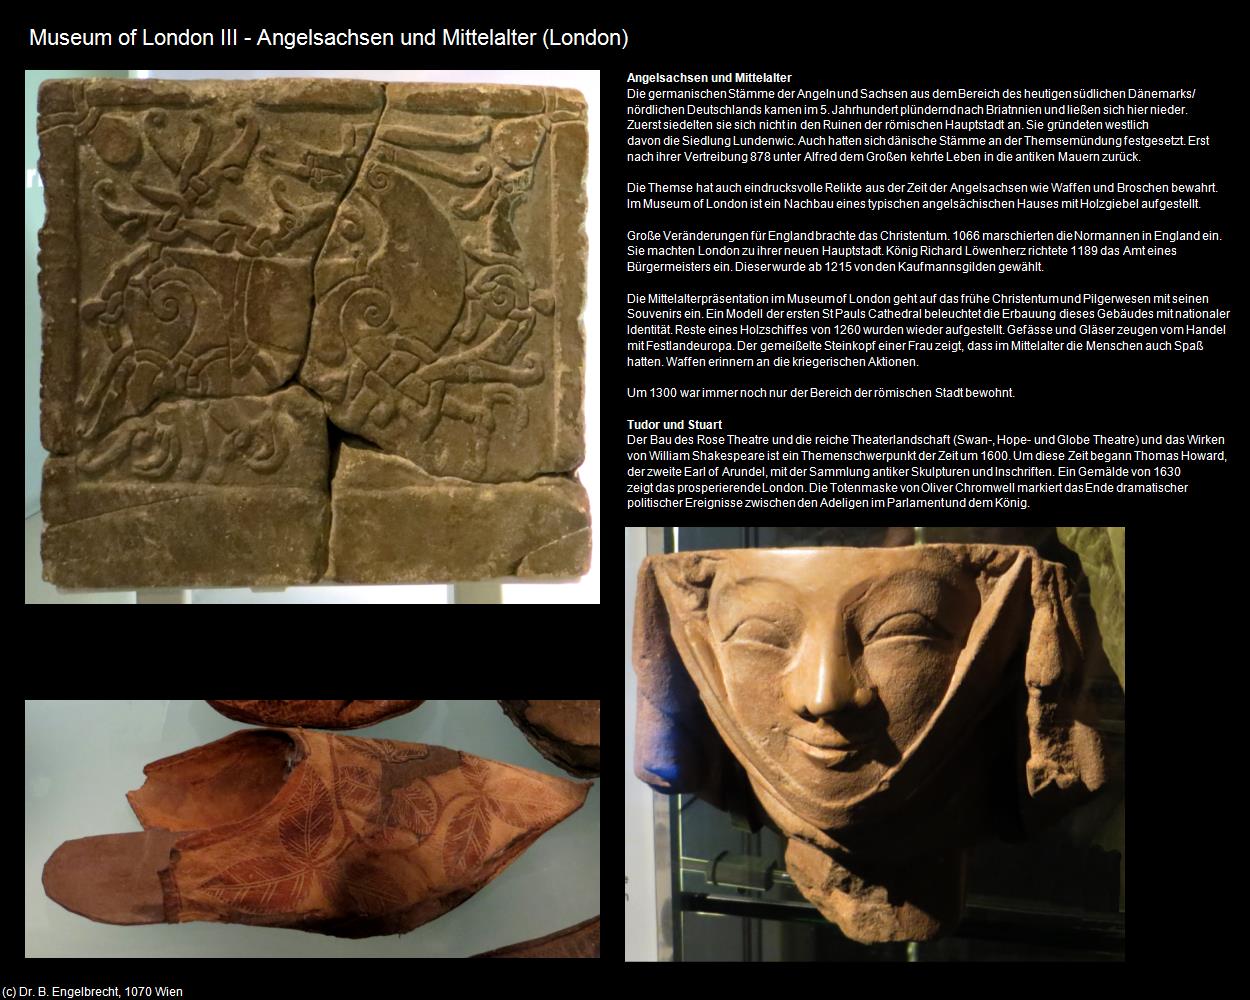 Museum of London III - Angelsachsen und Mittelalter (London, England) in Kulturatlas-ENGLAND und WALES